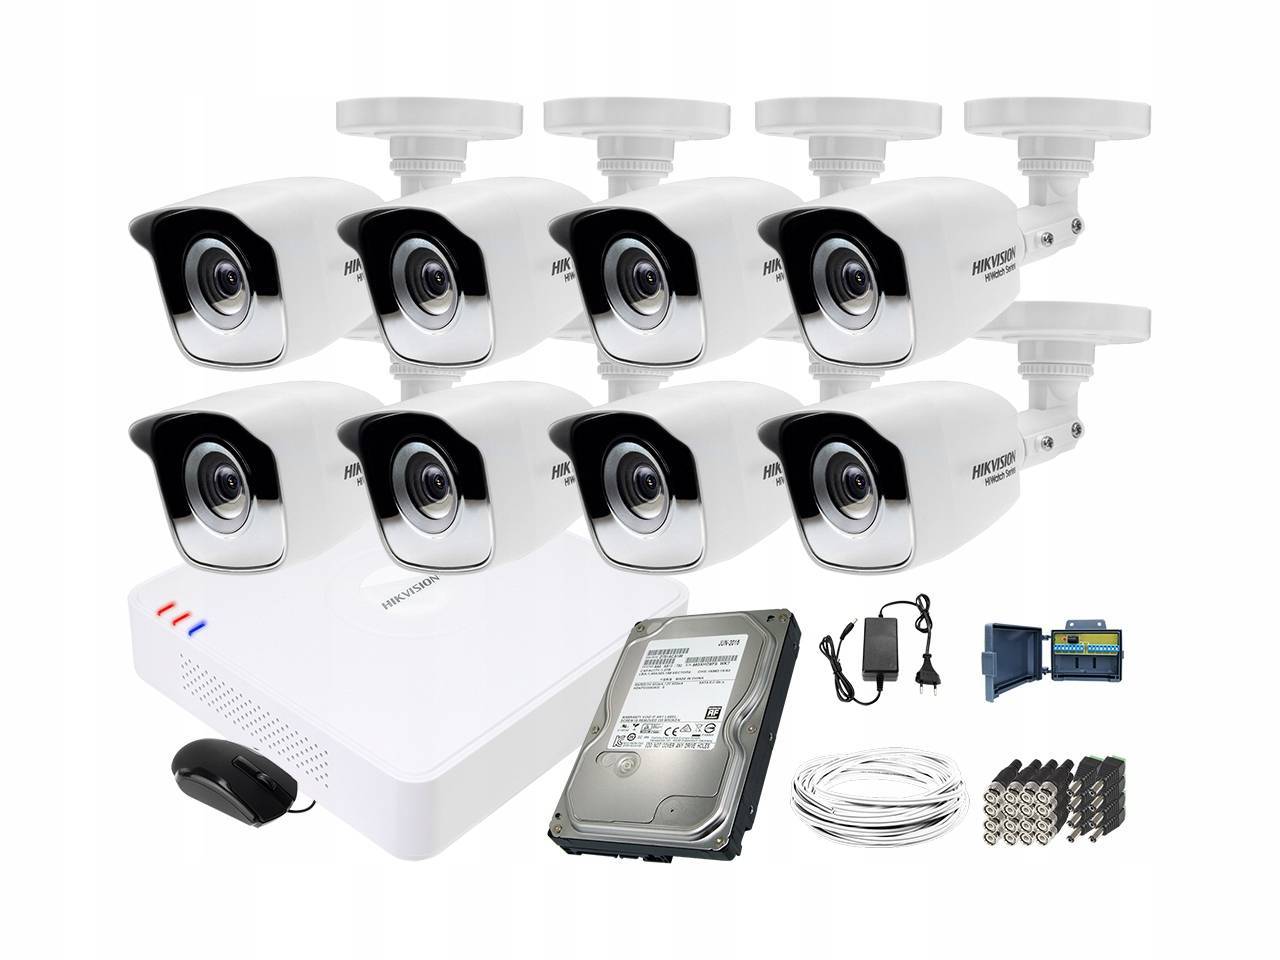 4g ip камера видеонаблюдения. Комплект видеонаблюдения Hikvision на 4 камеры IP. Комплект Hikvision видеонаблюдение на 20 камер. Комплект видеонаблюдения Tiandy 4. Hikvision комплект видеонаблюдения на 8.